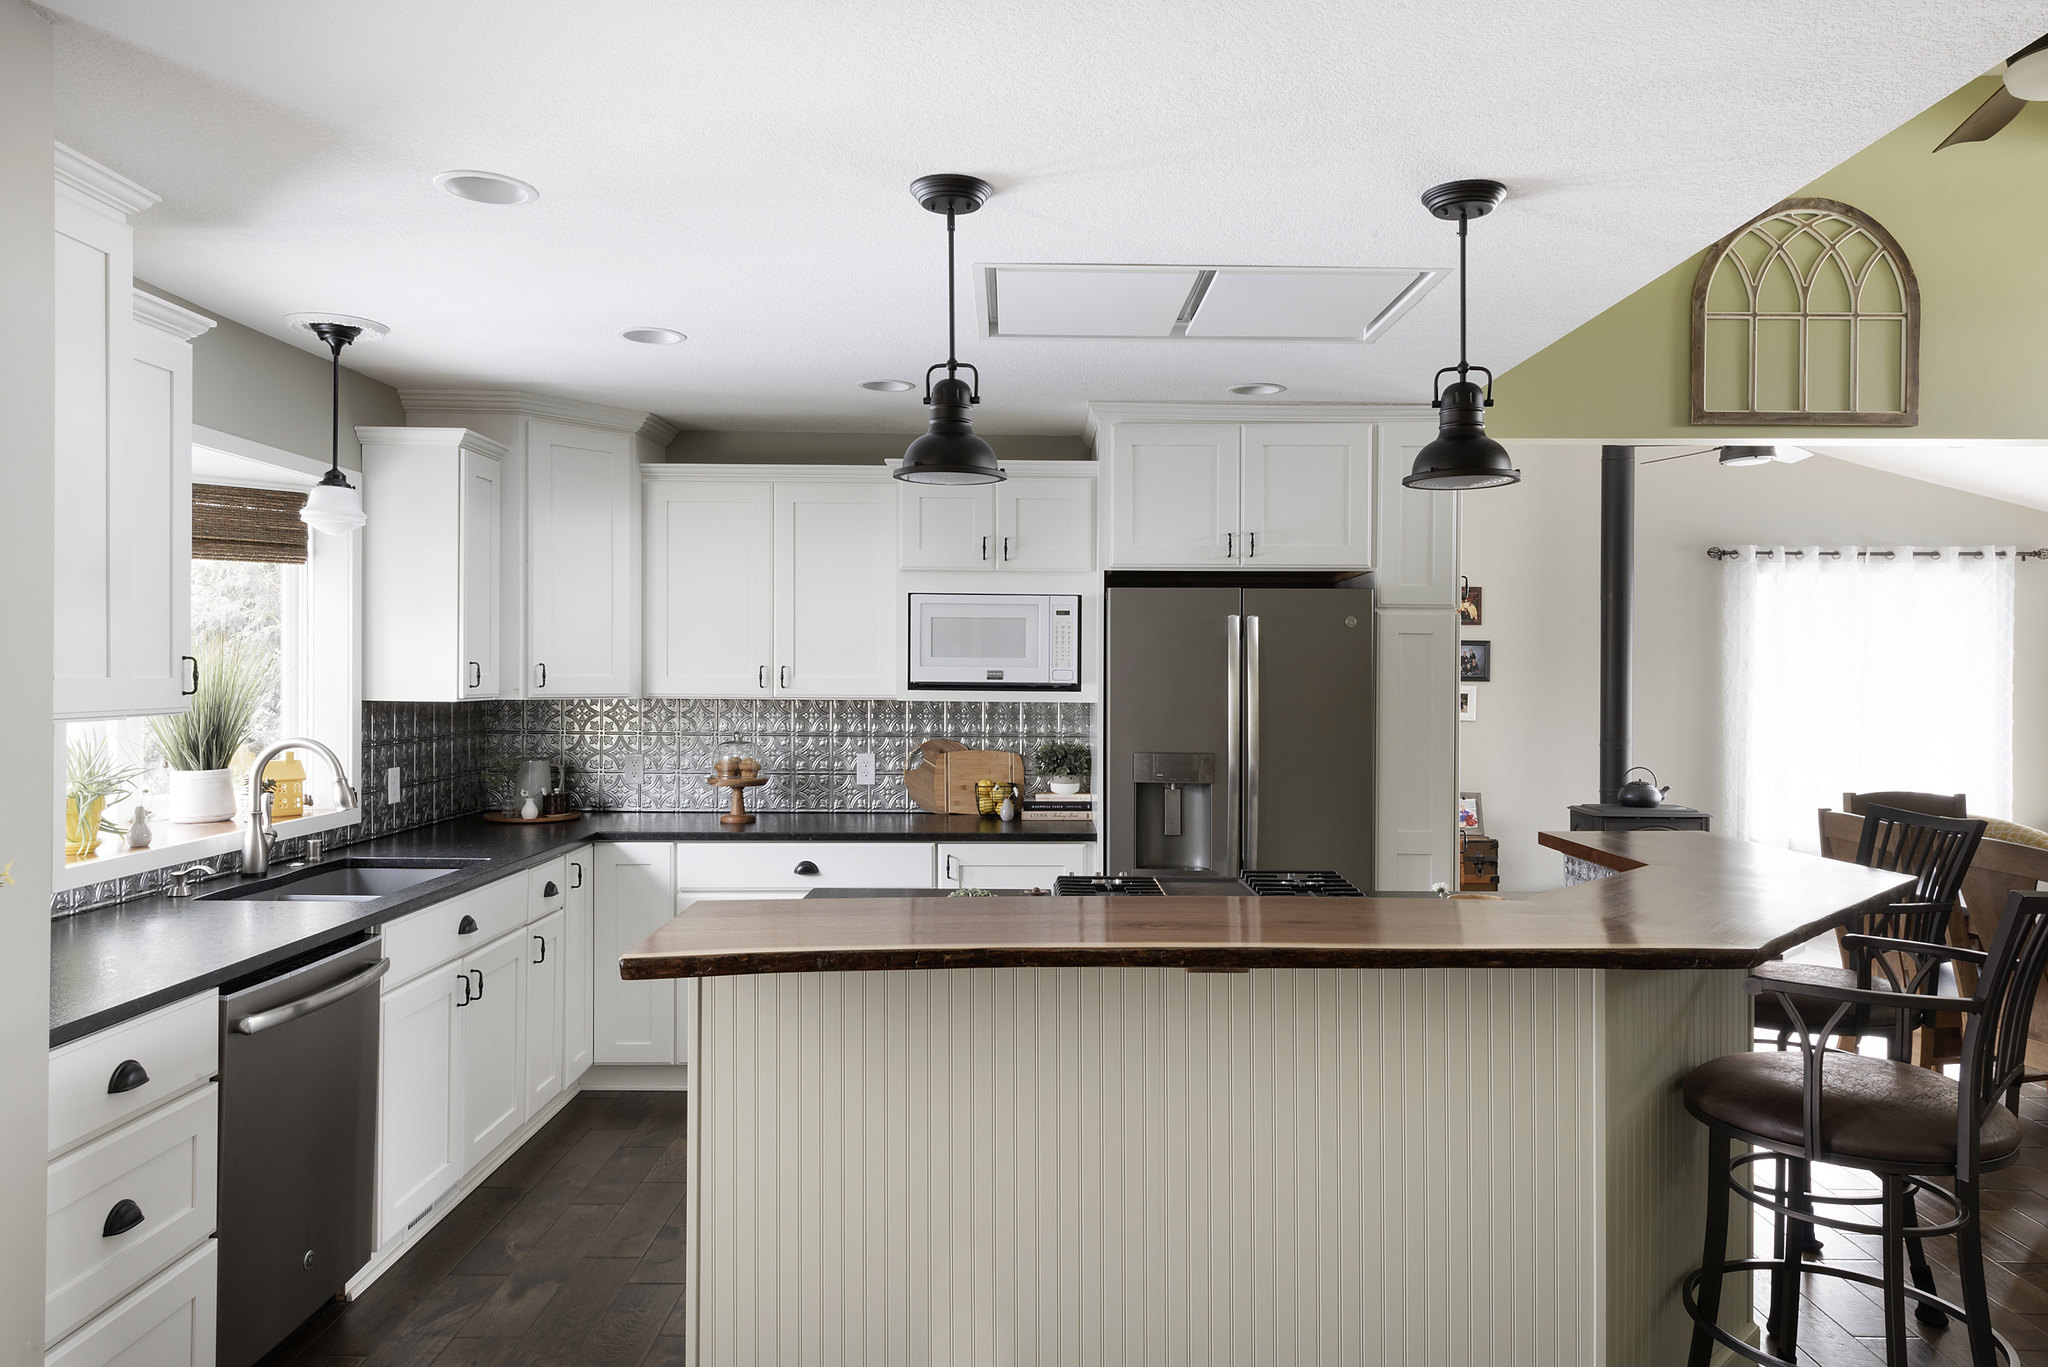 Kitchen remodel by White Birch Design, A Lakeville MN based remodeler